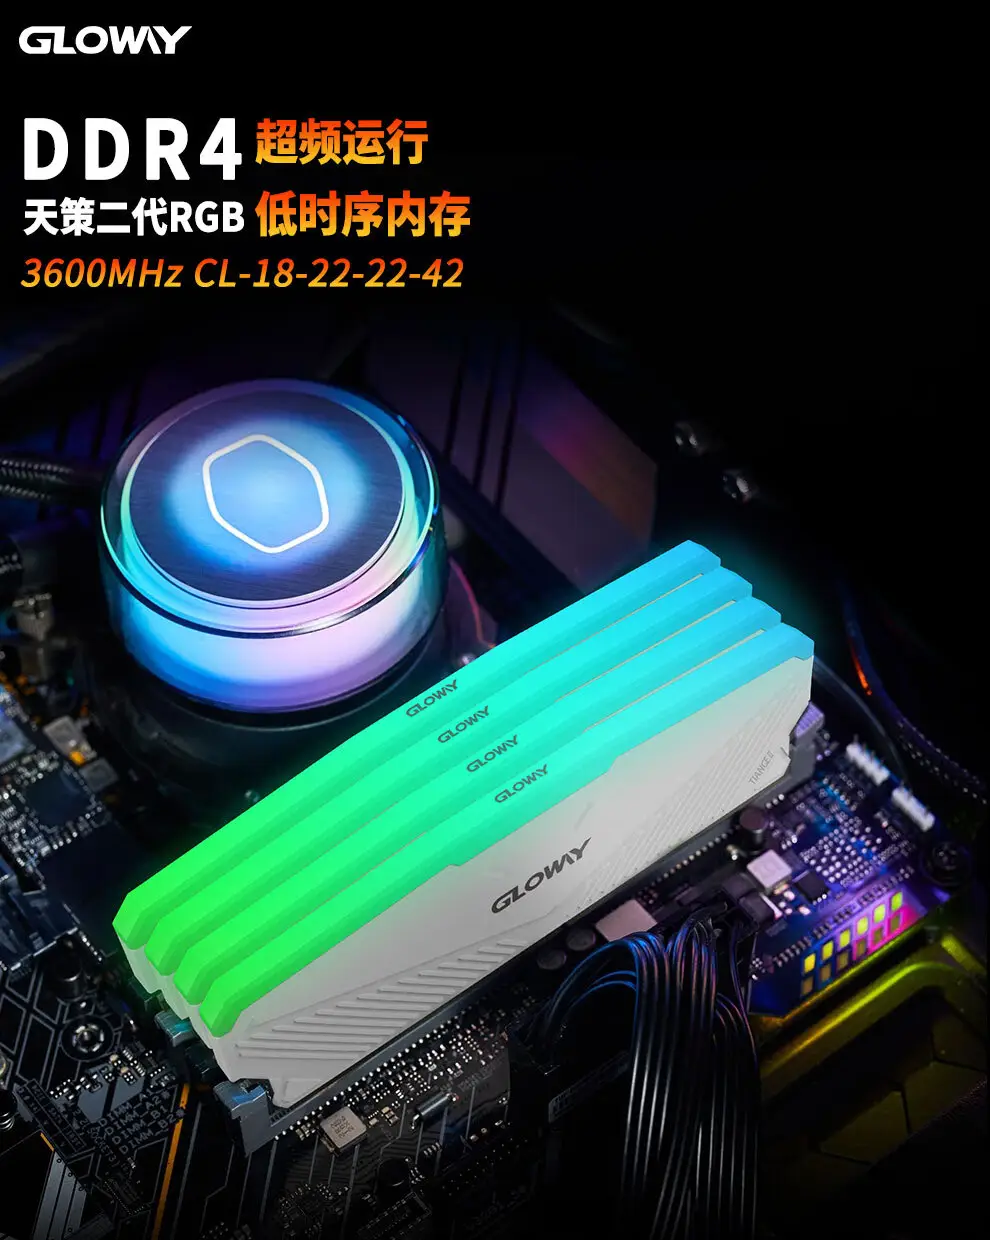 DDR4 主板：性能卓越，价格亲民，您的电脑升级首选  第4张